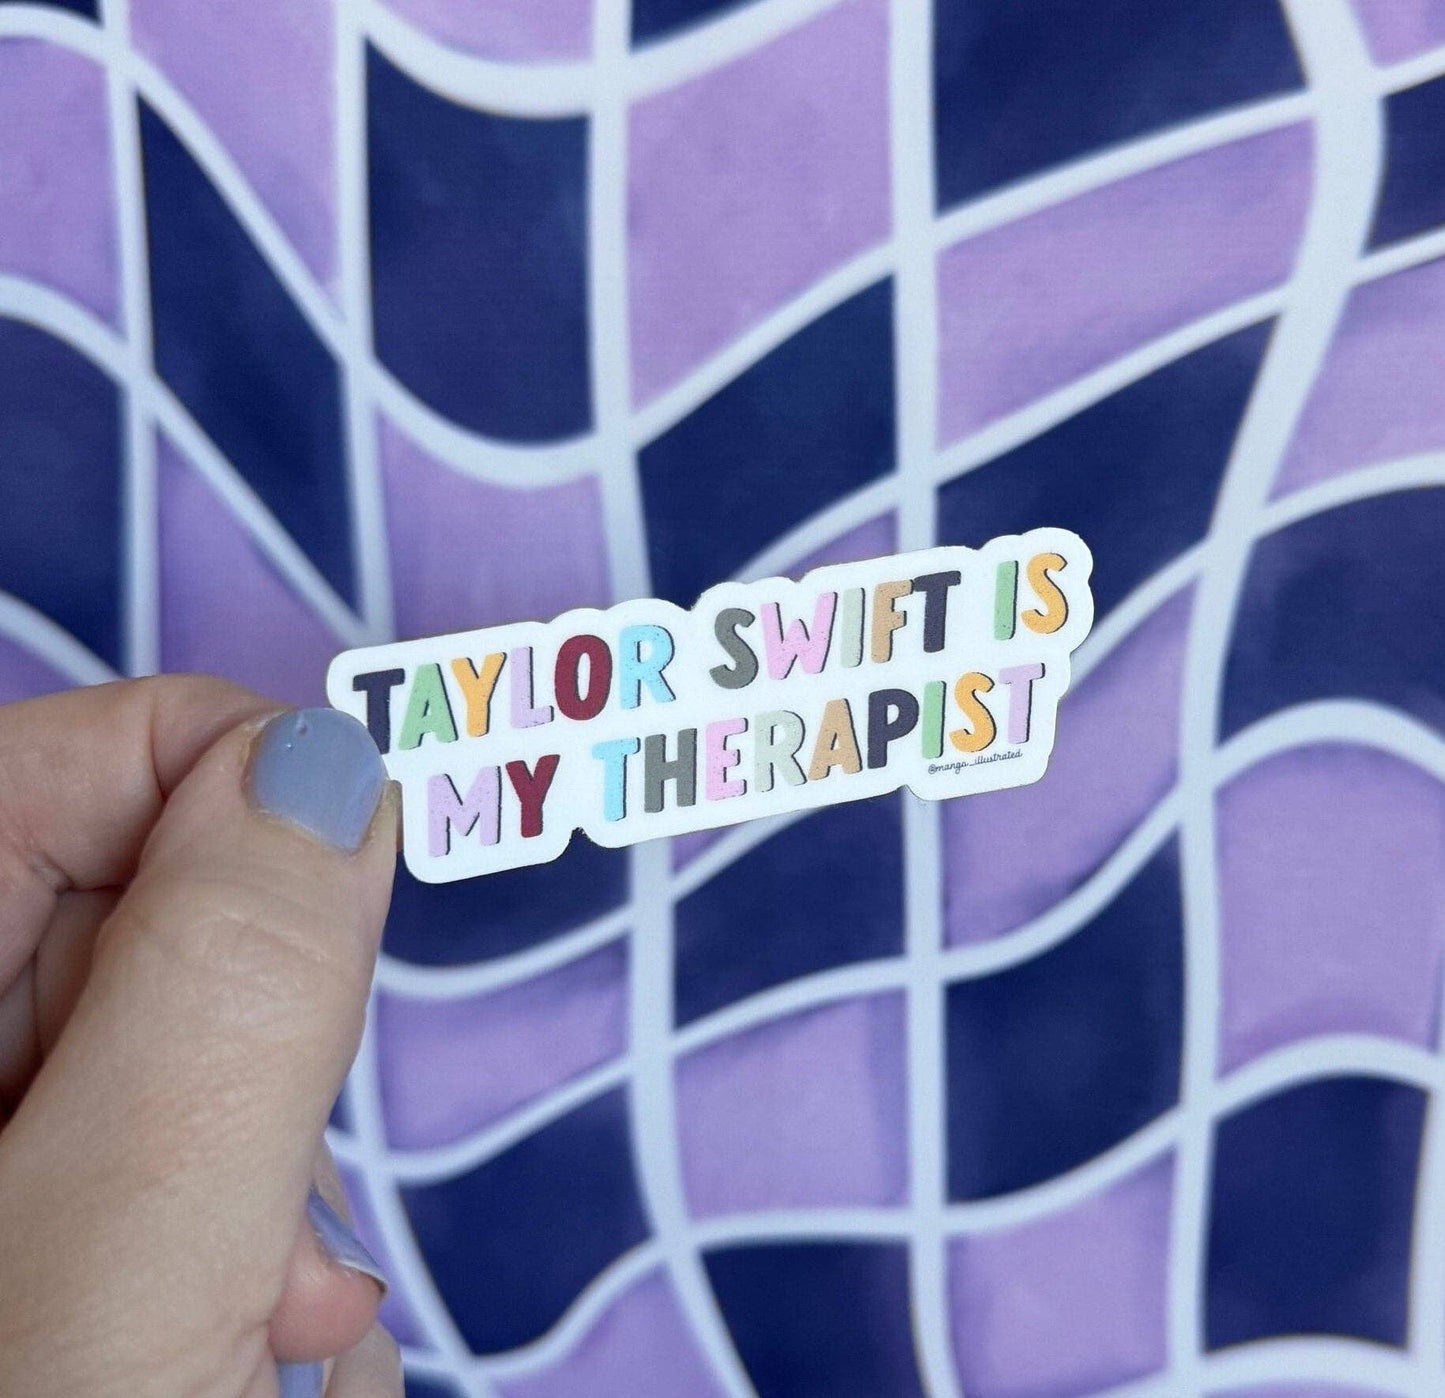 Taylor Swift Is My Therapist Sticker